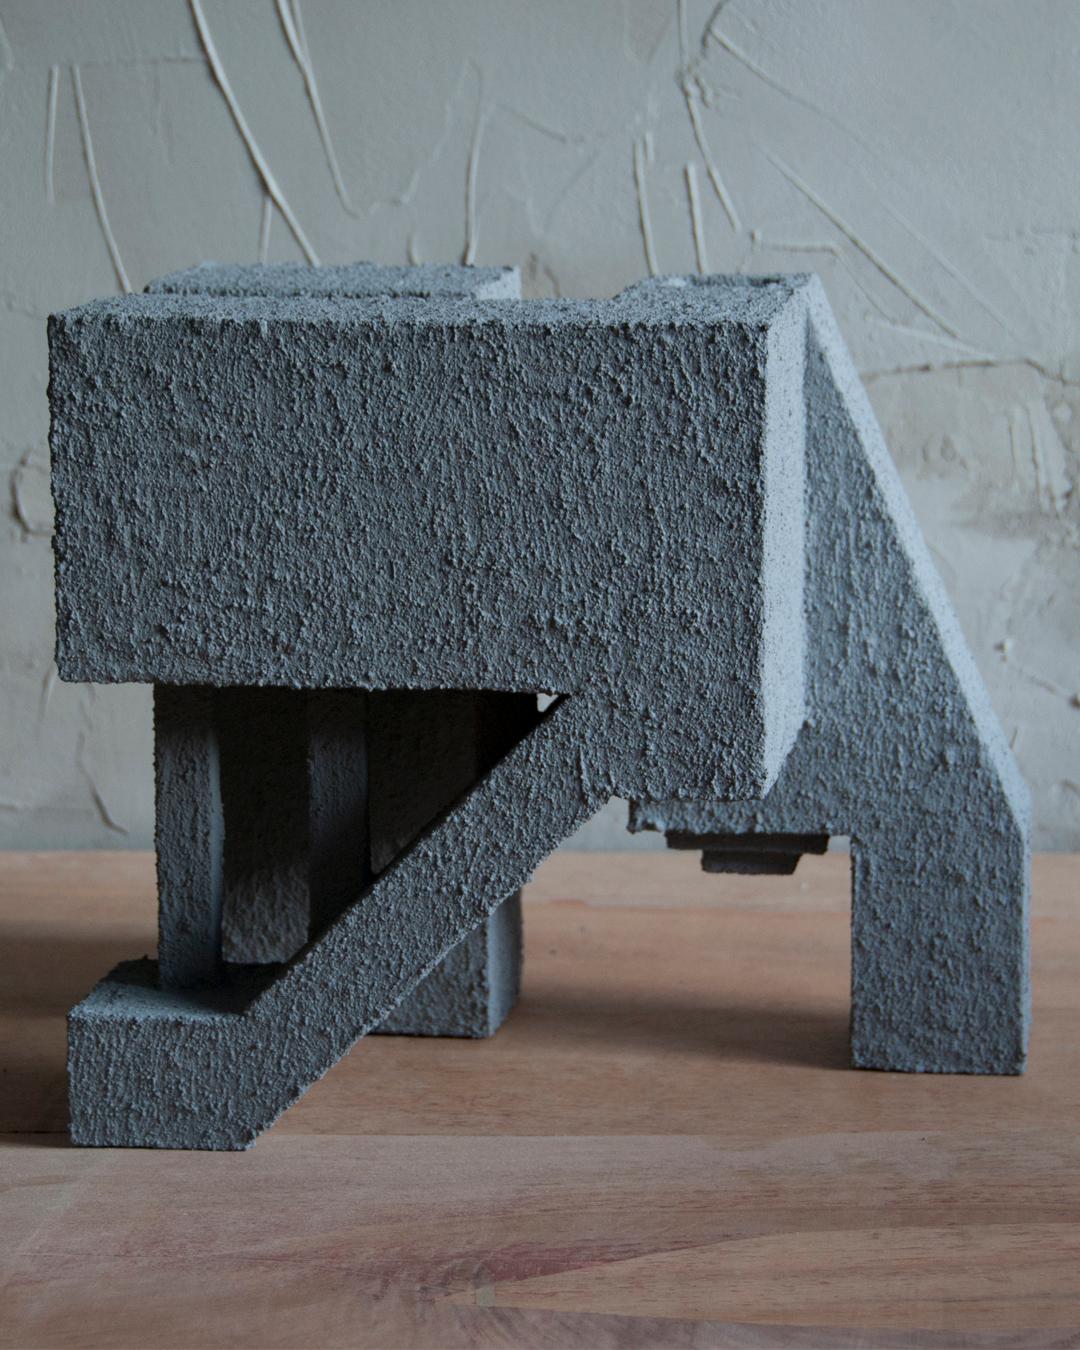 Spanish Sculpture Contemporary Geometric Constructivist Wood Concrete Grey- The Elephant For Sale